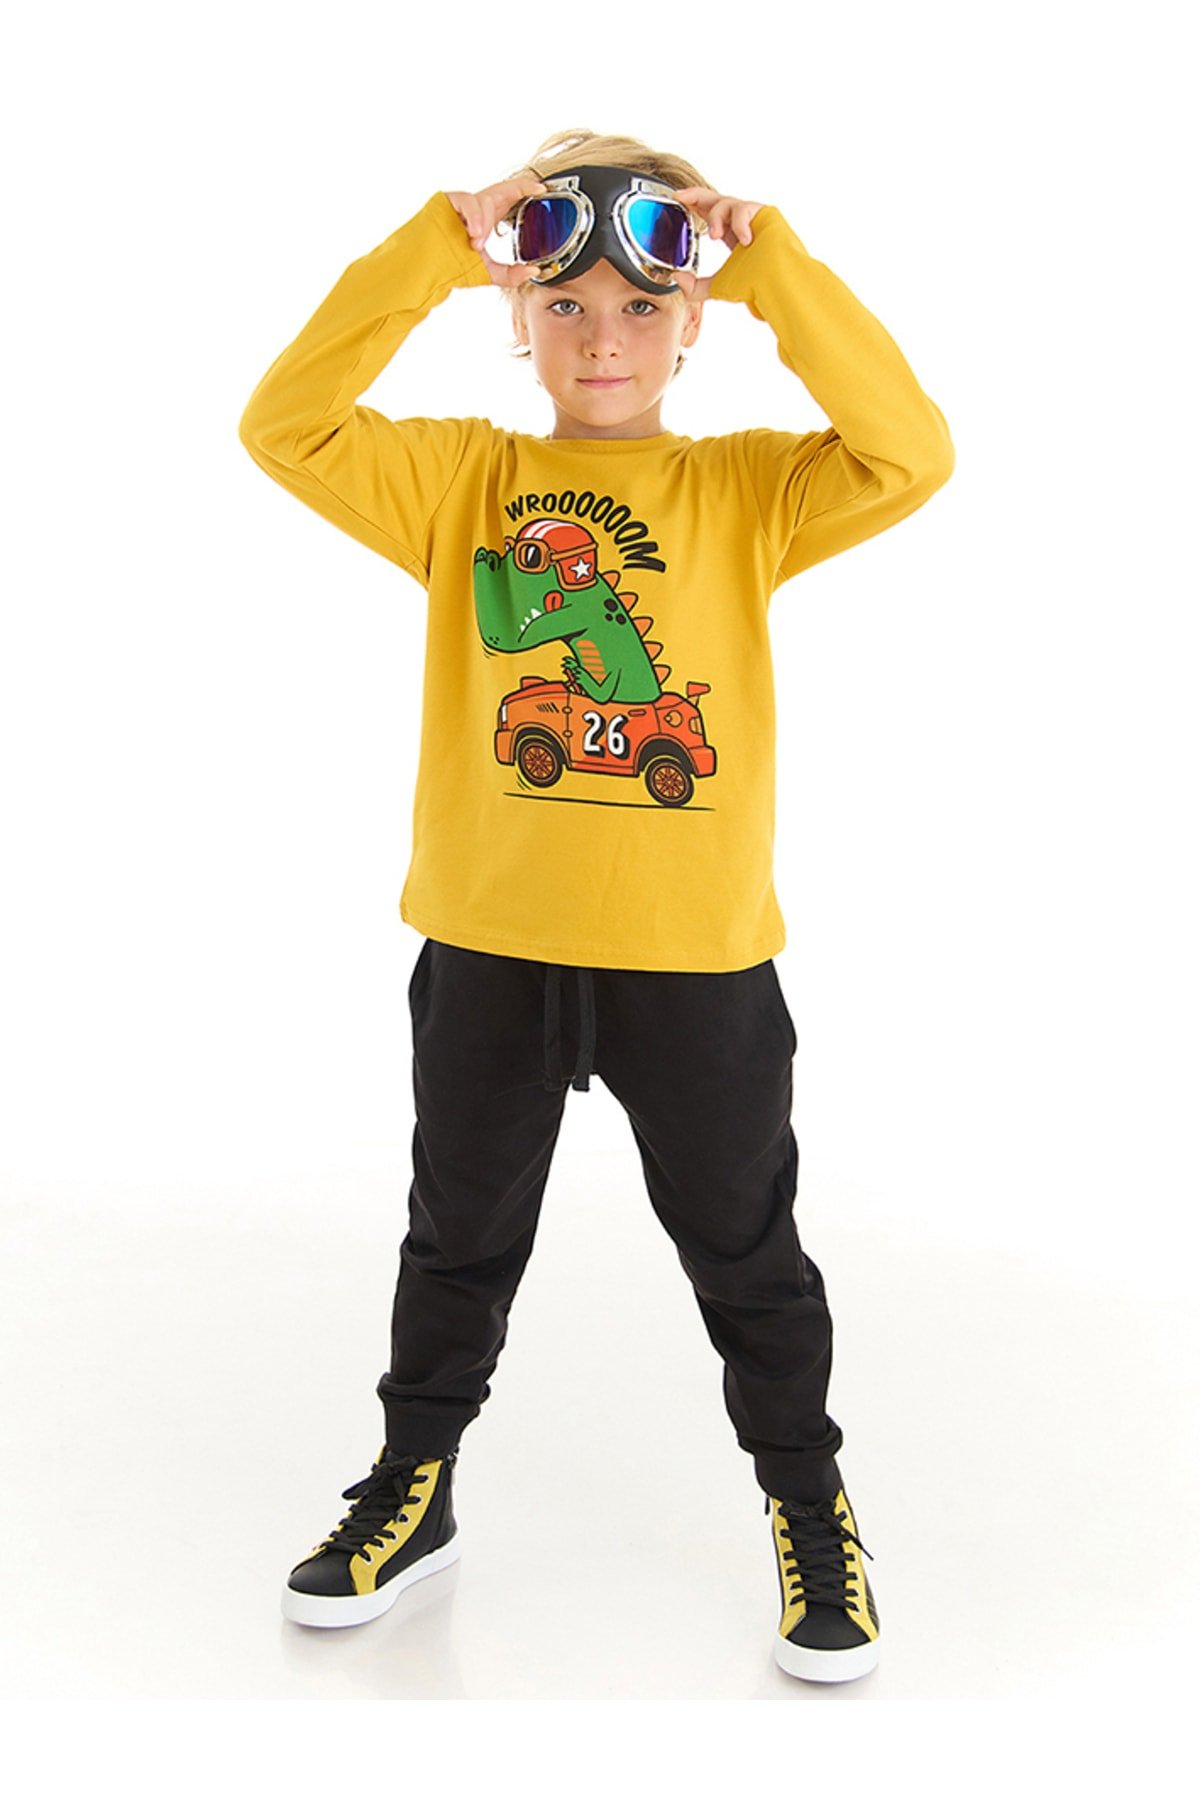 Denokids Racer Alligator Boys T-shirt and Pants Set